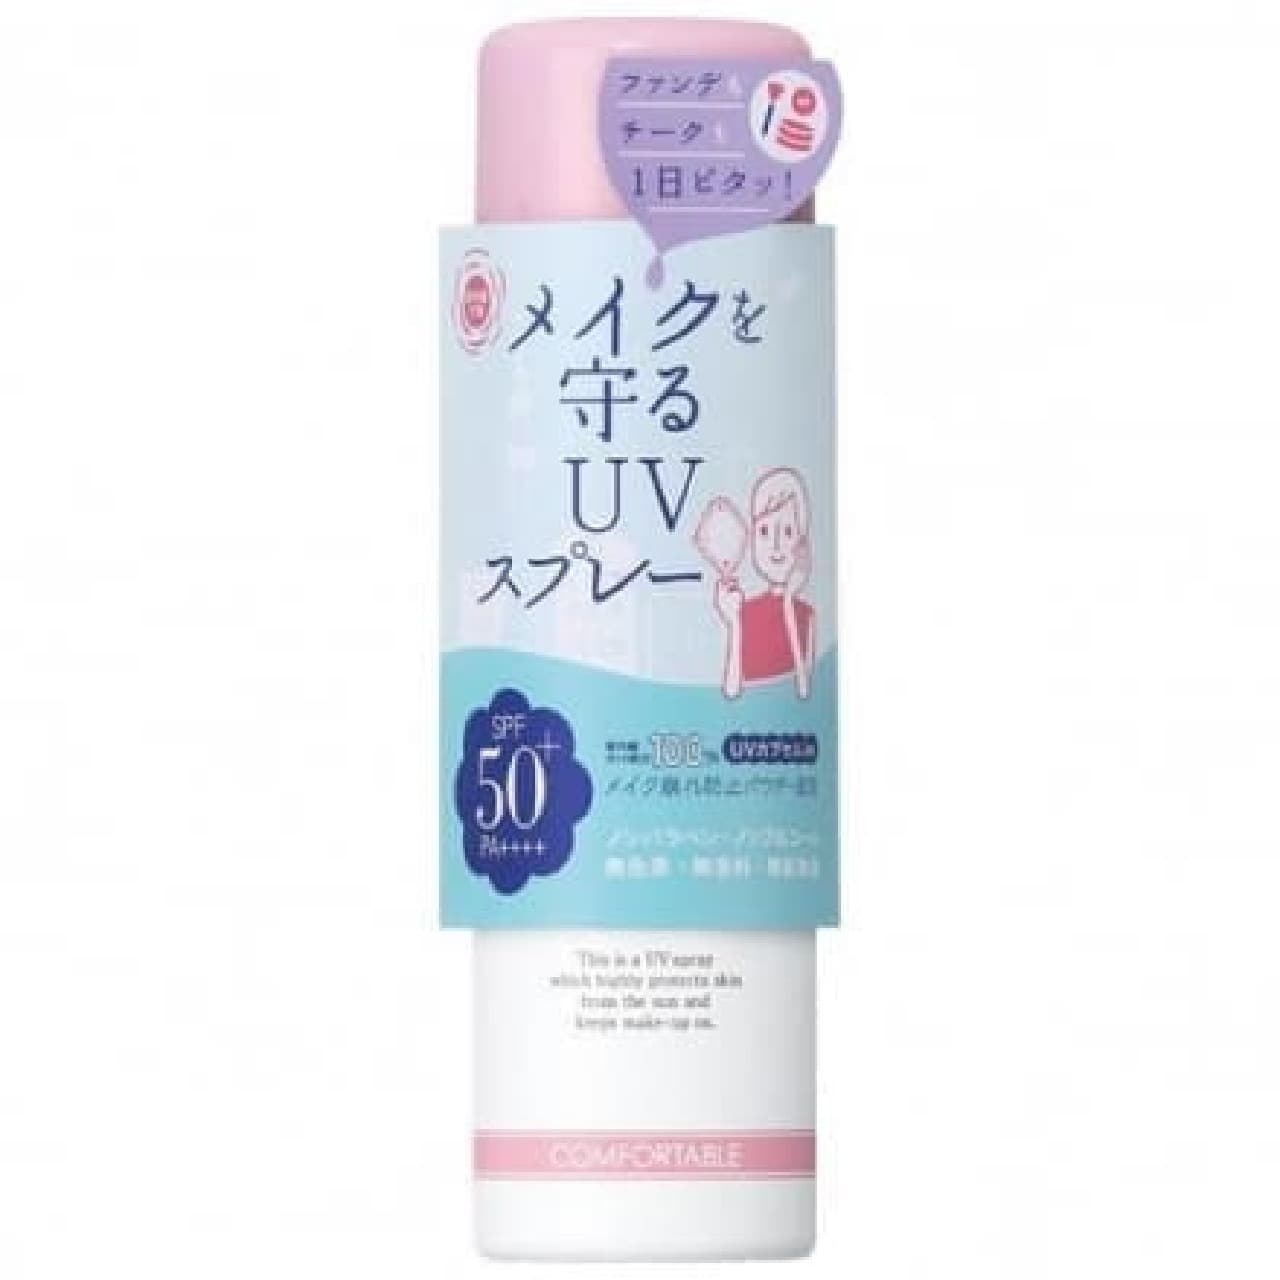 UV forecast UV spray that protects makeup